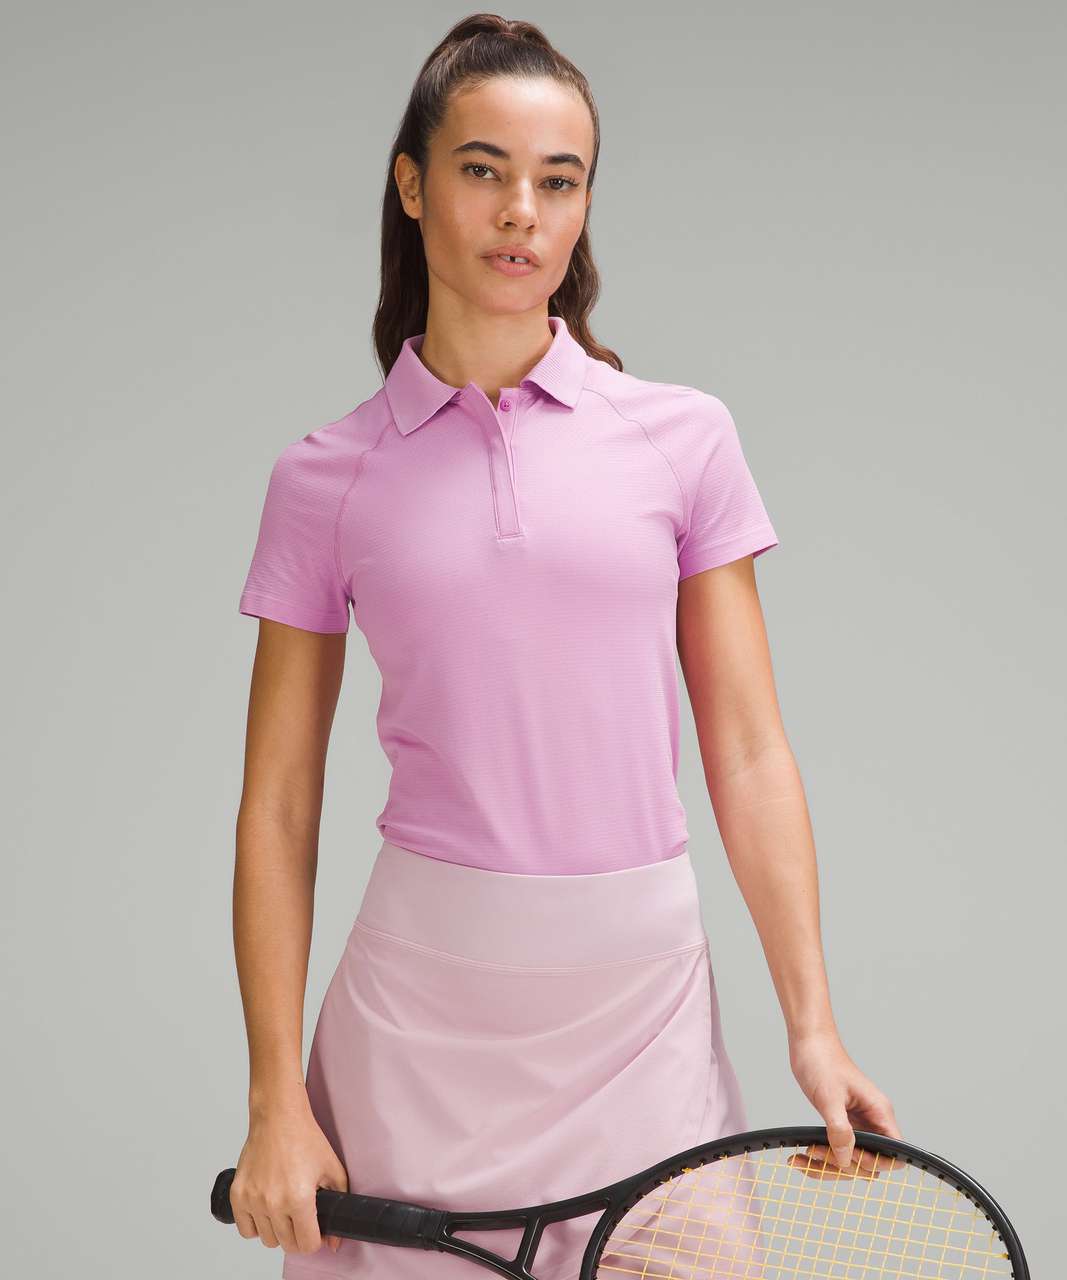 Lululemon Swiftly Tech Short-Sleeve Polo Shirt - Dahlia Mauve / Dahlia Mauve